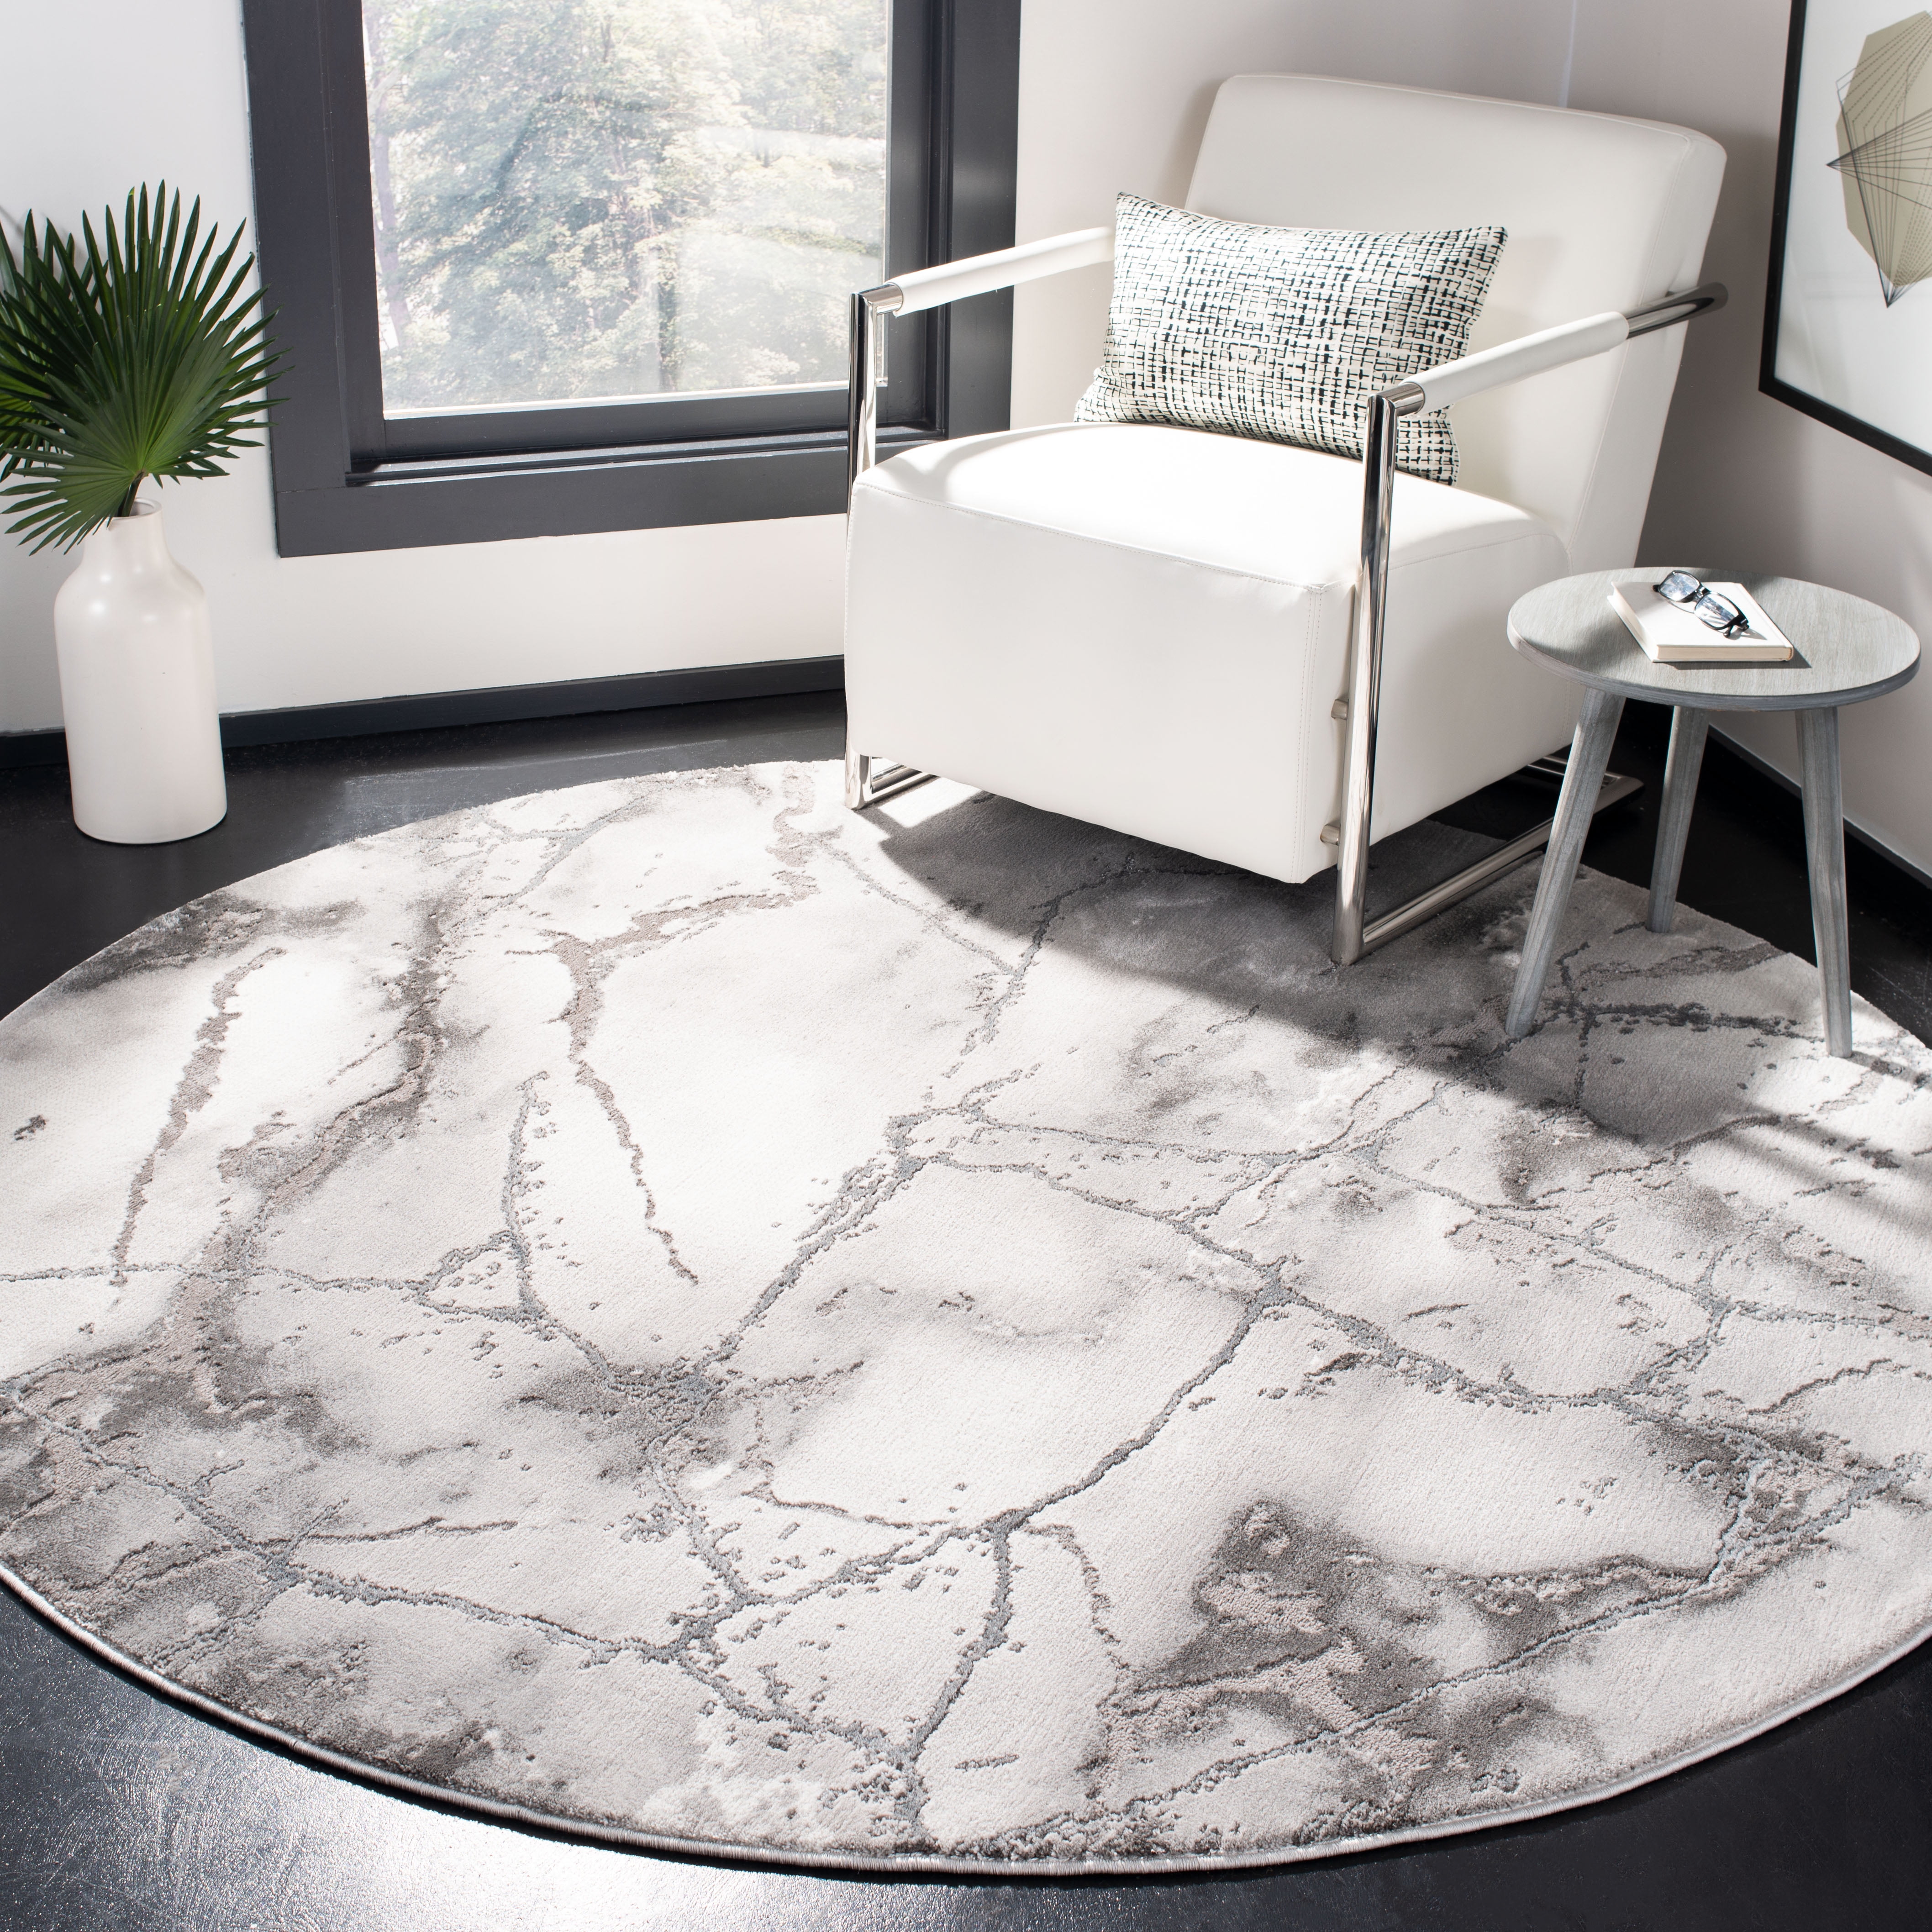 Geometric Marble Texture Round Floor Mat Bedroom Carpet Living Room Area Rugs